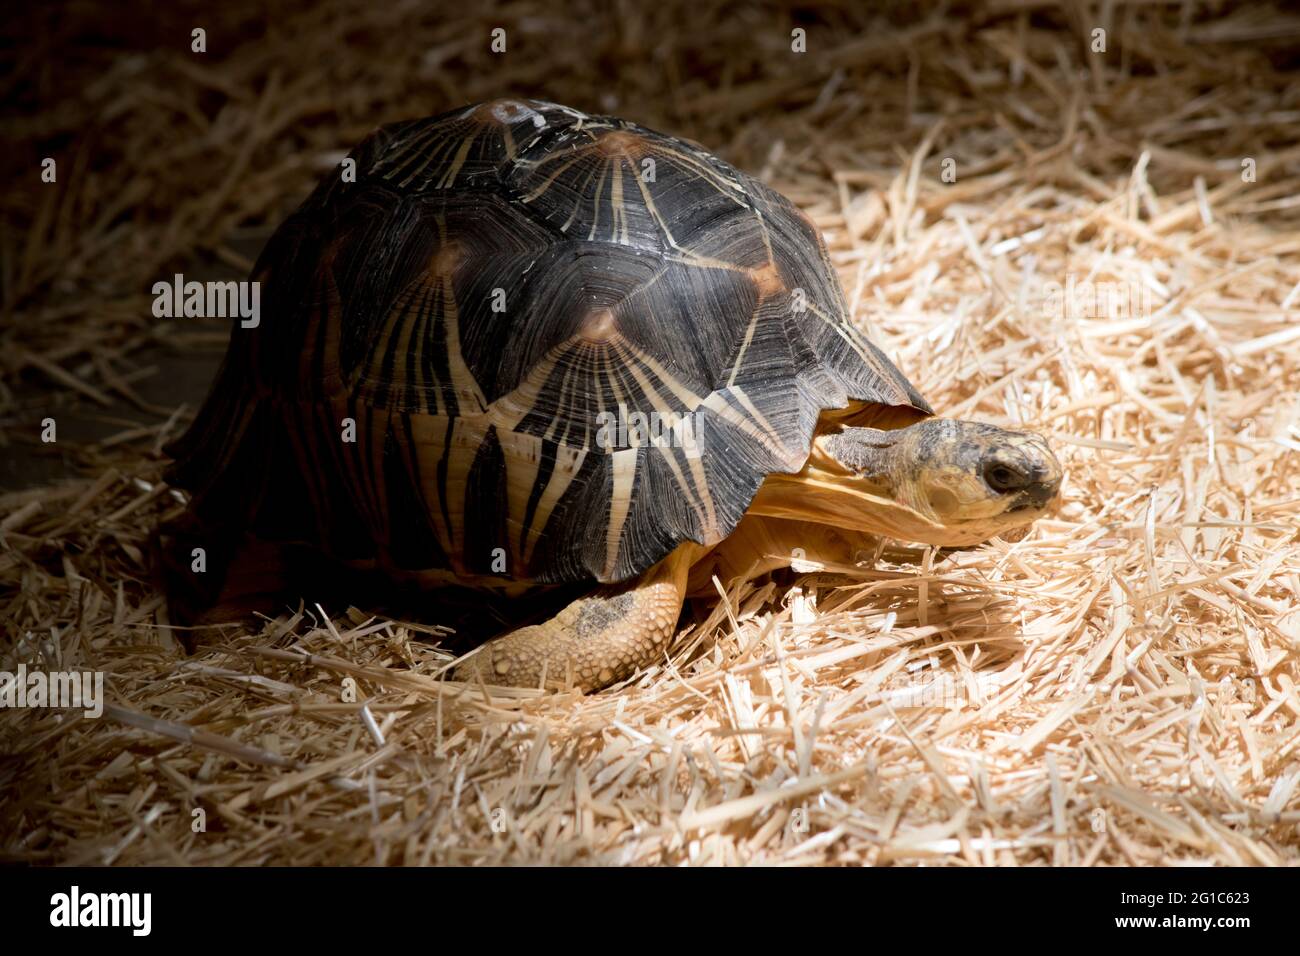 questa è una vista laterale di una tartaruga irradiata Foto Stock